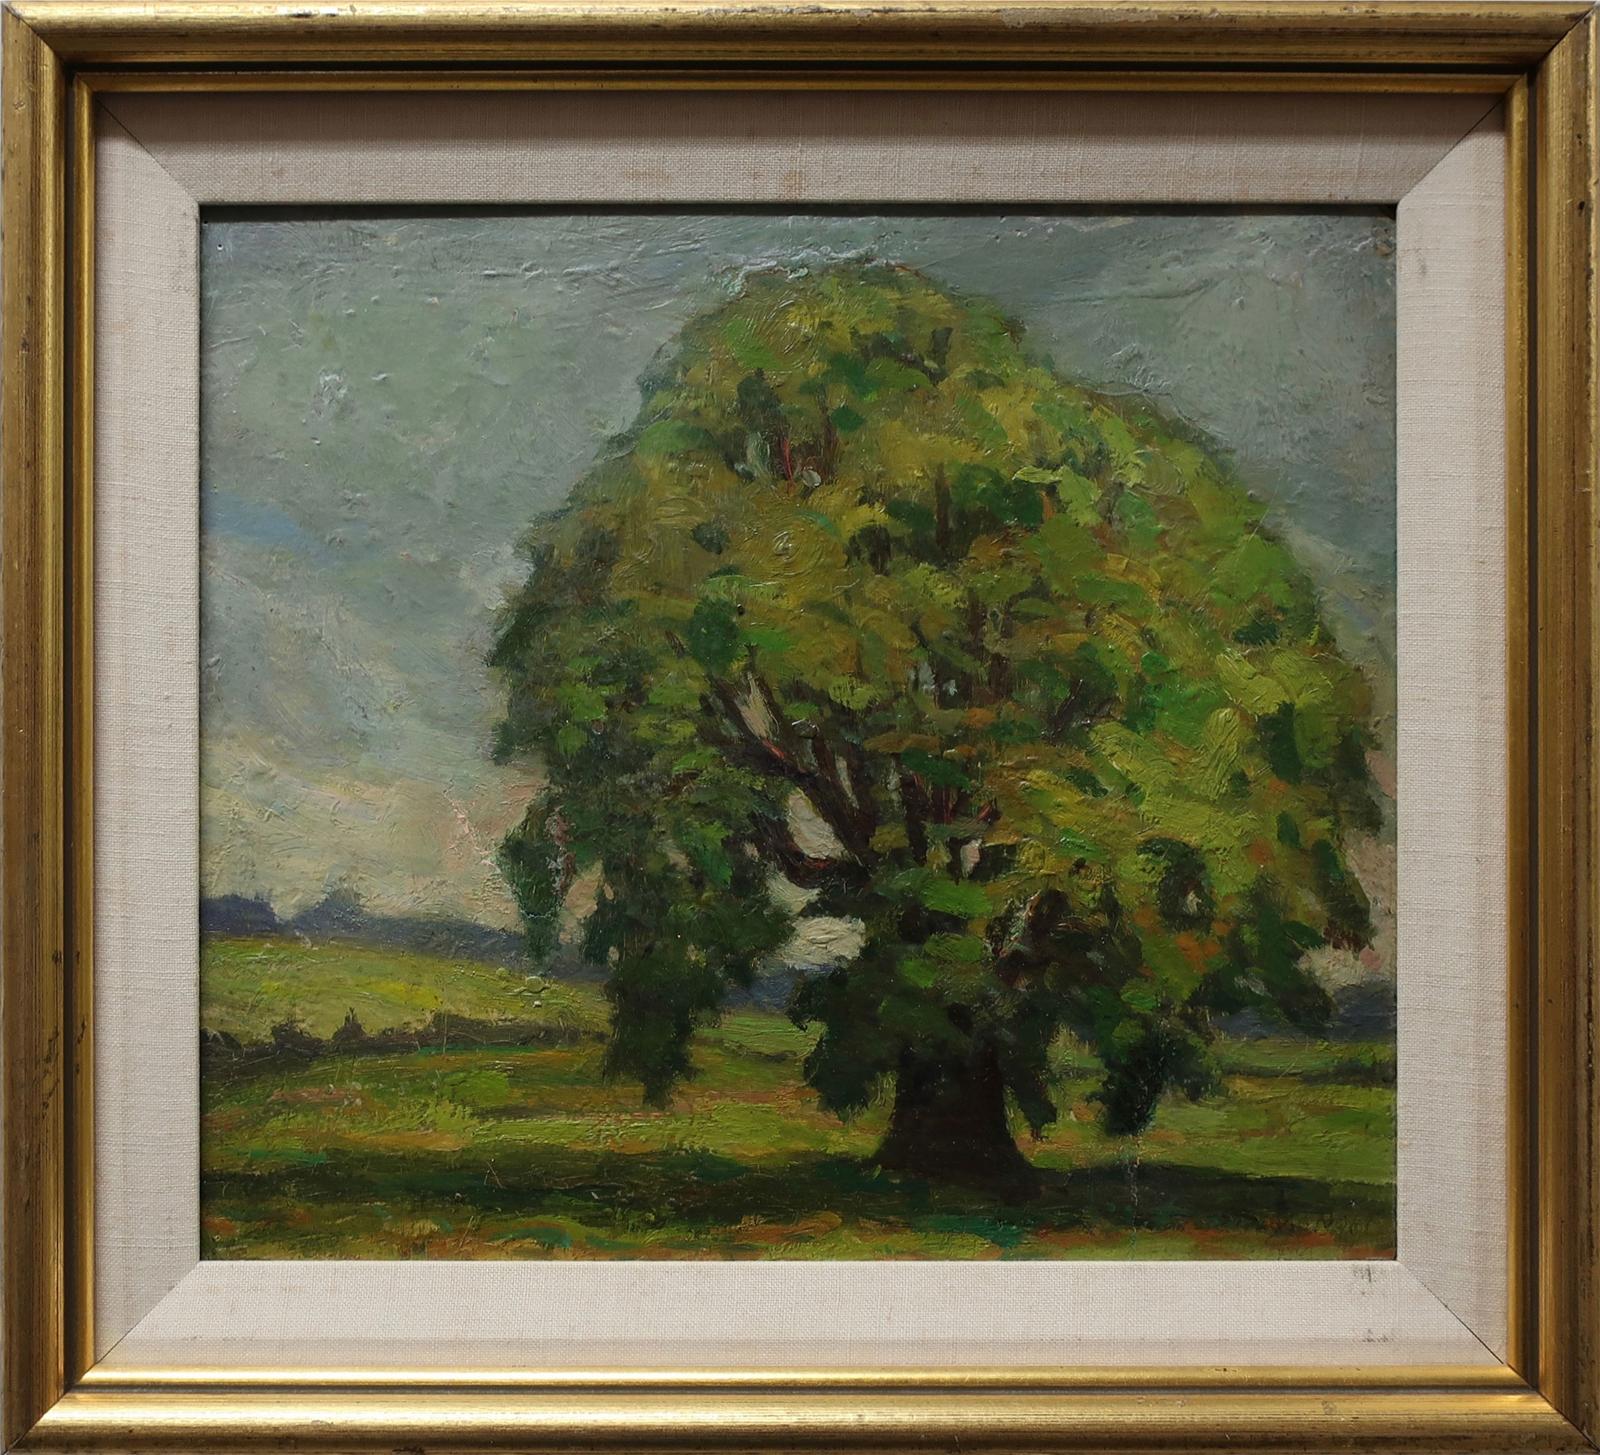 Peter Stoyanoff (1900-1977) - Untitled (The Mighty Oak)